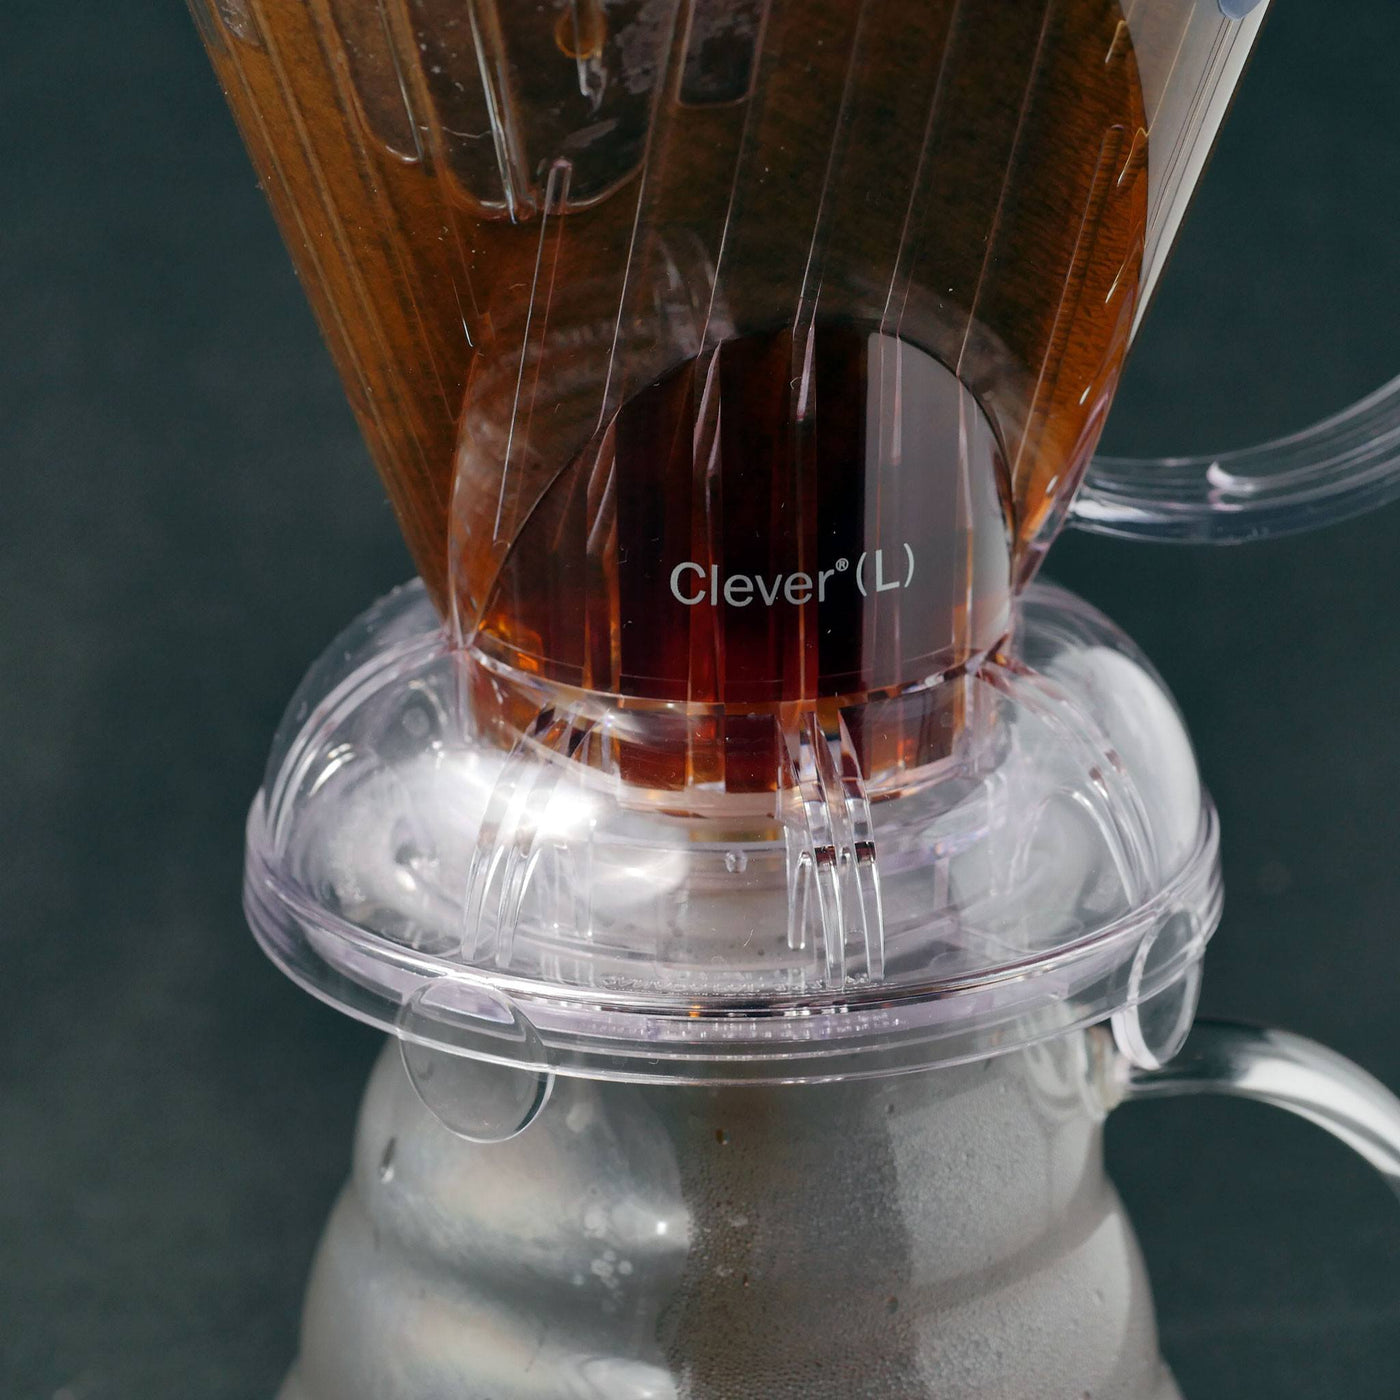 Clever Dripper Coffee Maker, 18 oz.